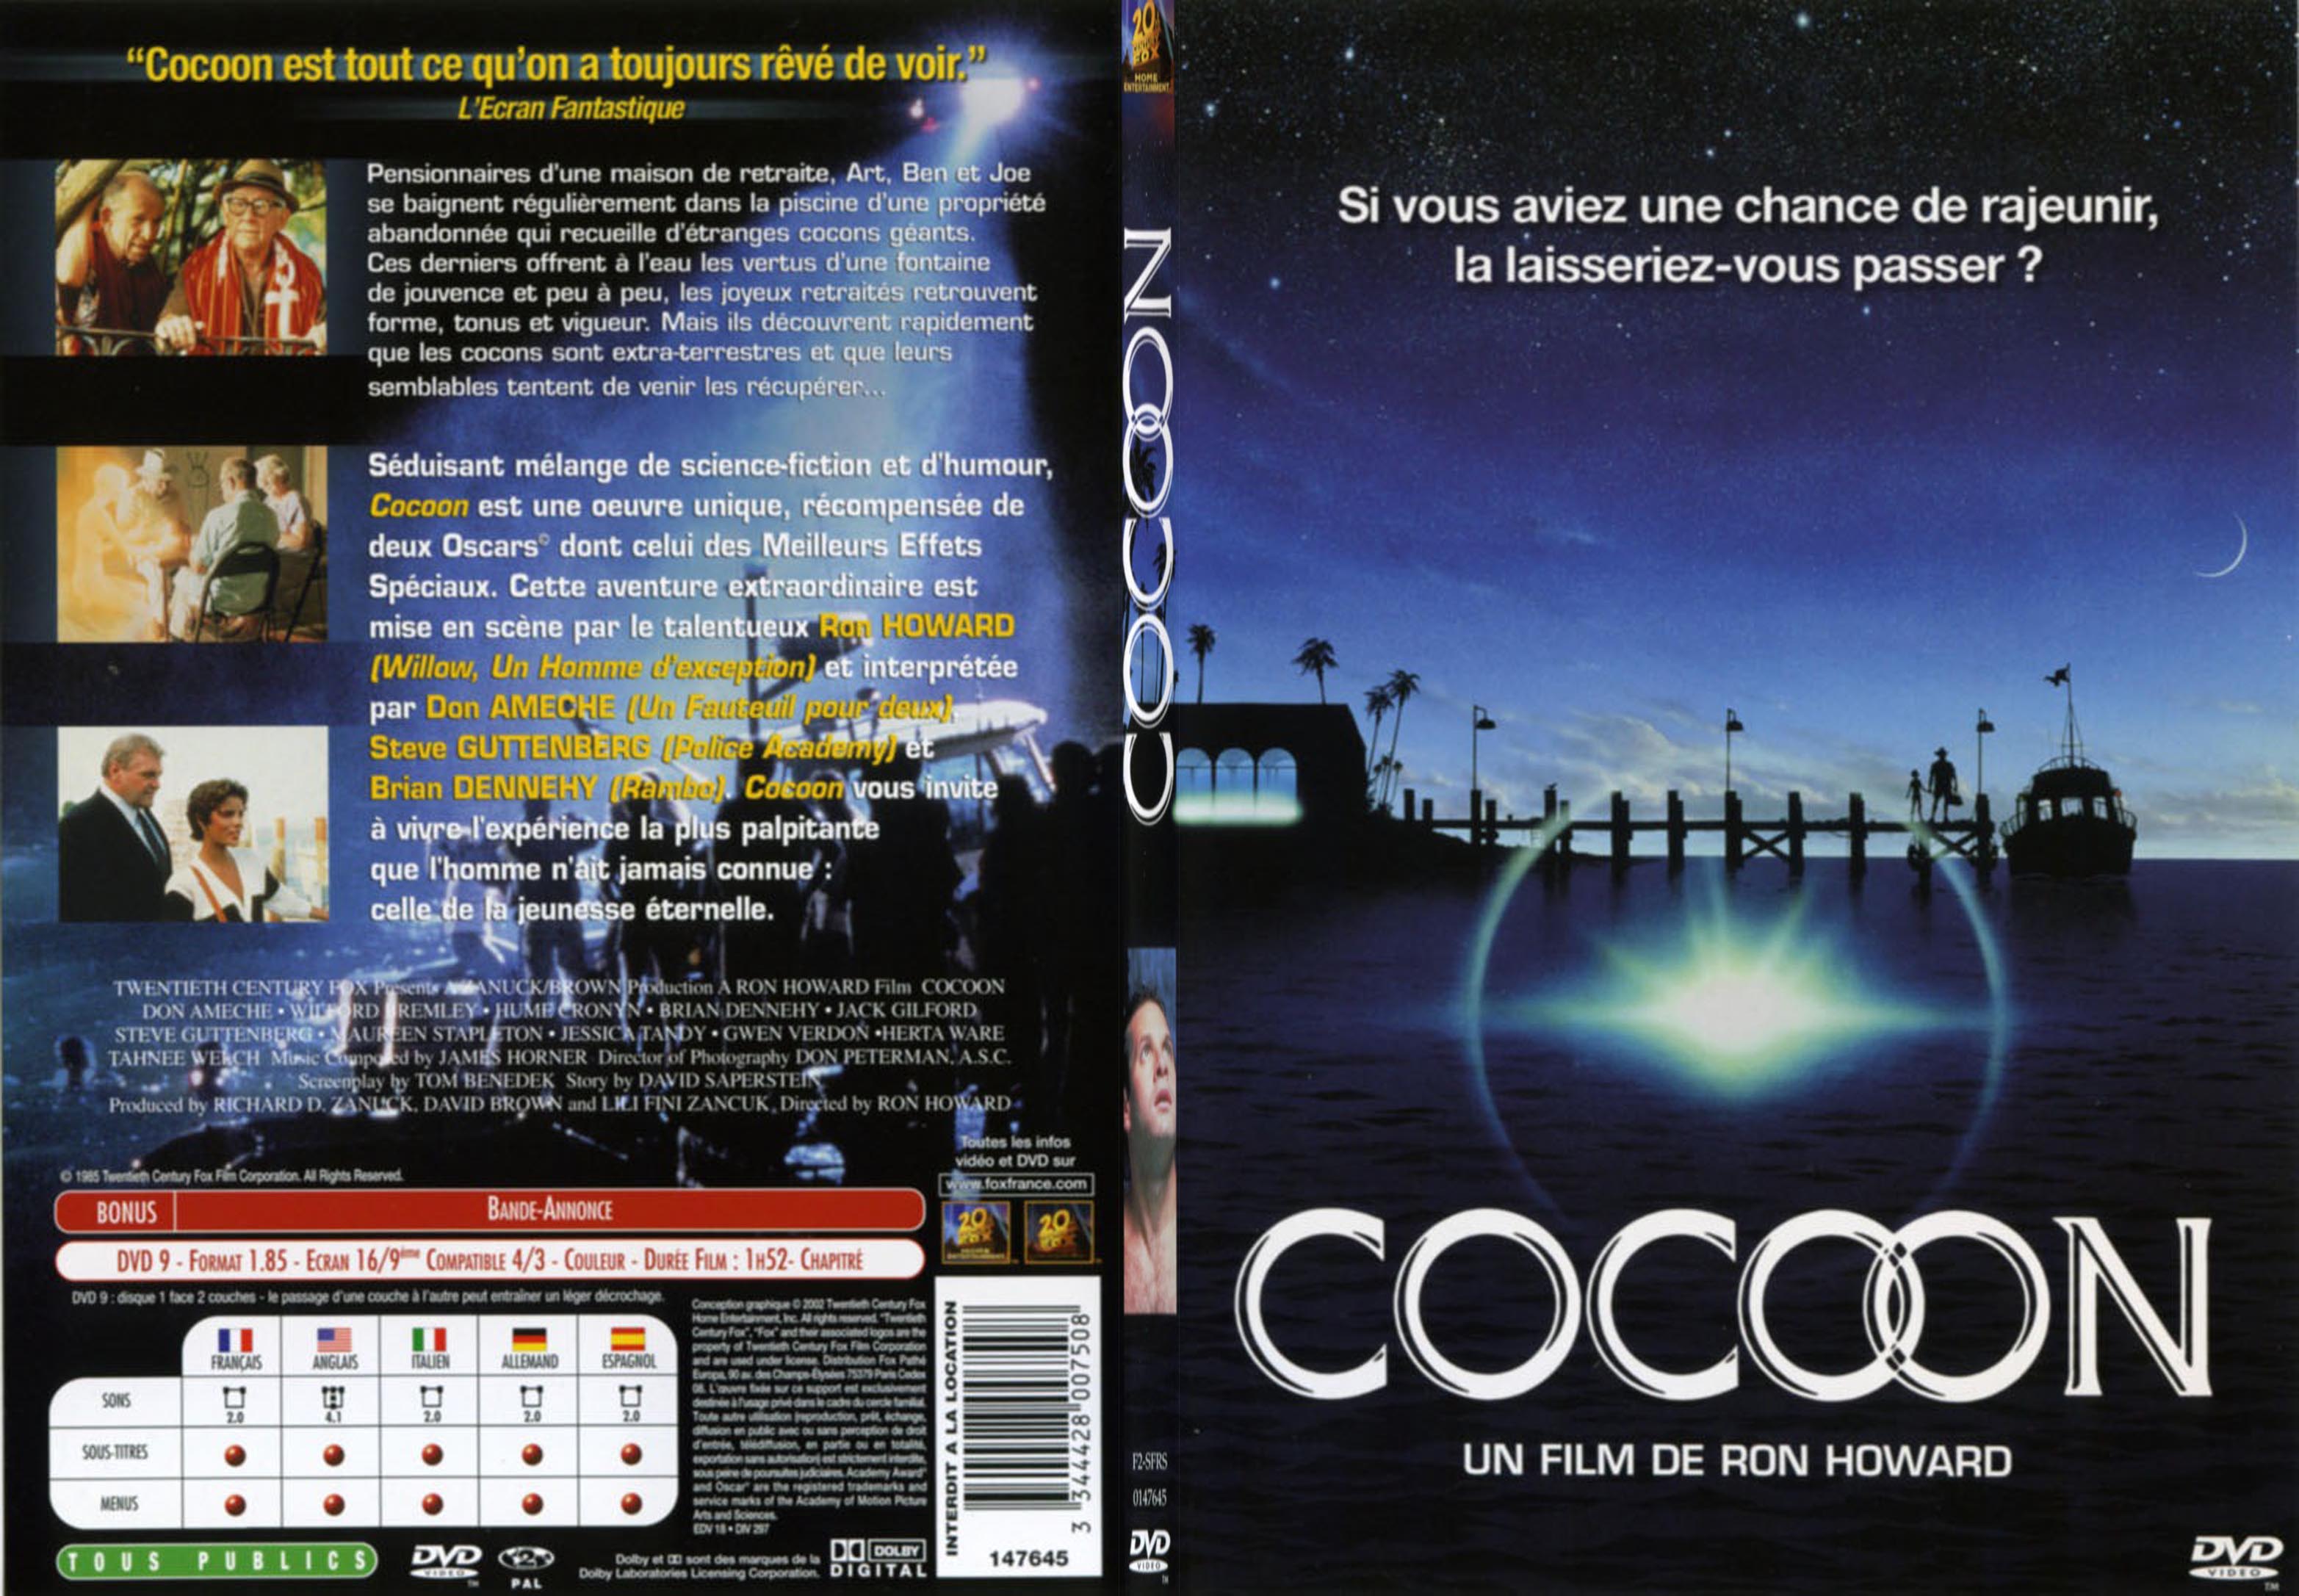 Jaquette DVD Cocoon - SLIM